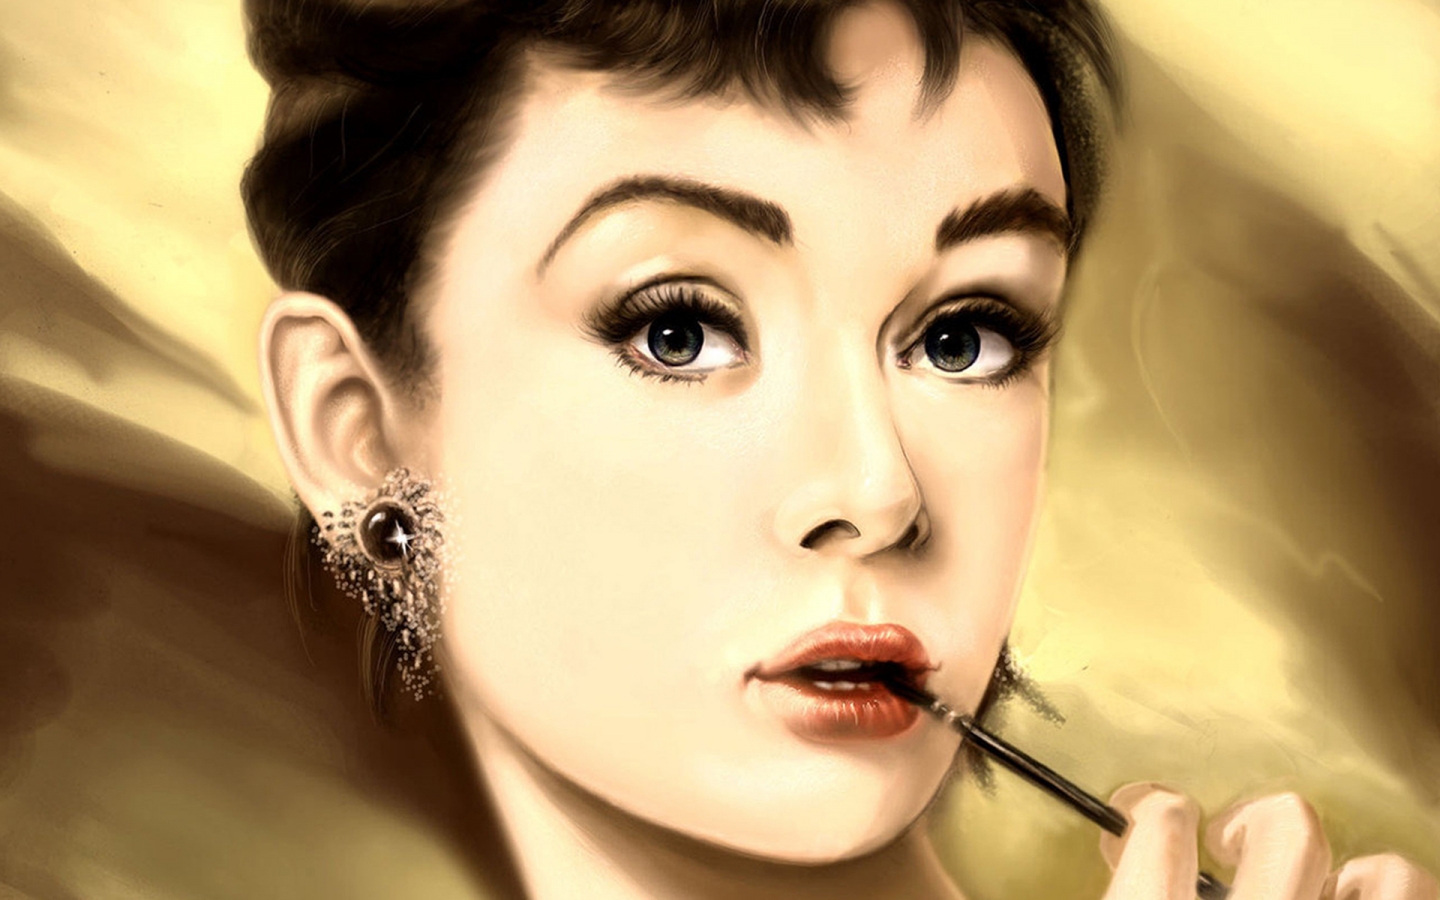 Audrey Hepburn Portrait Painting for 1440 x 900 widescreen resolution